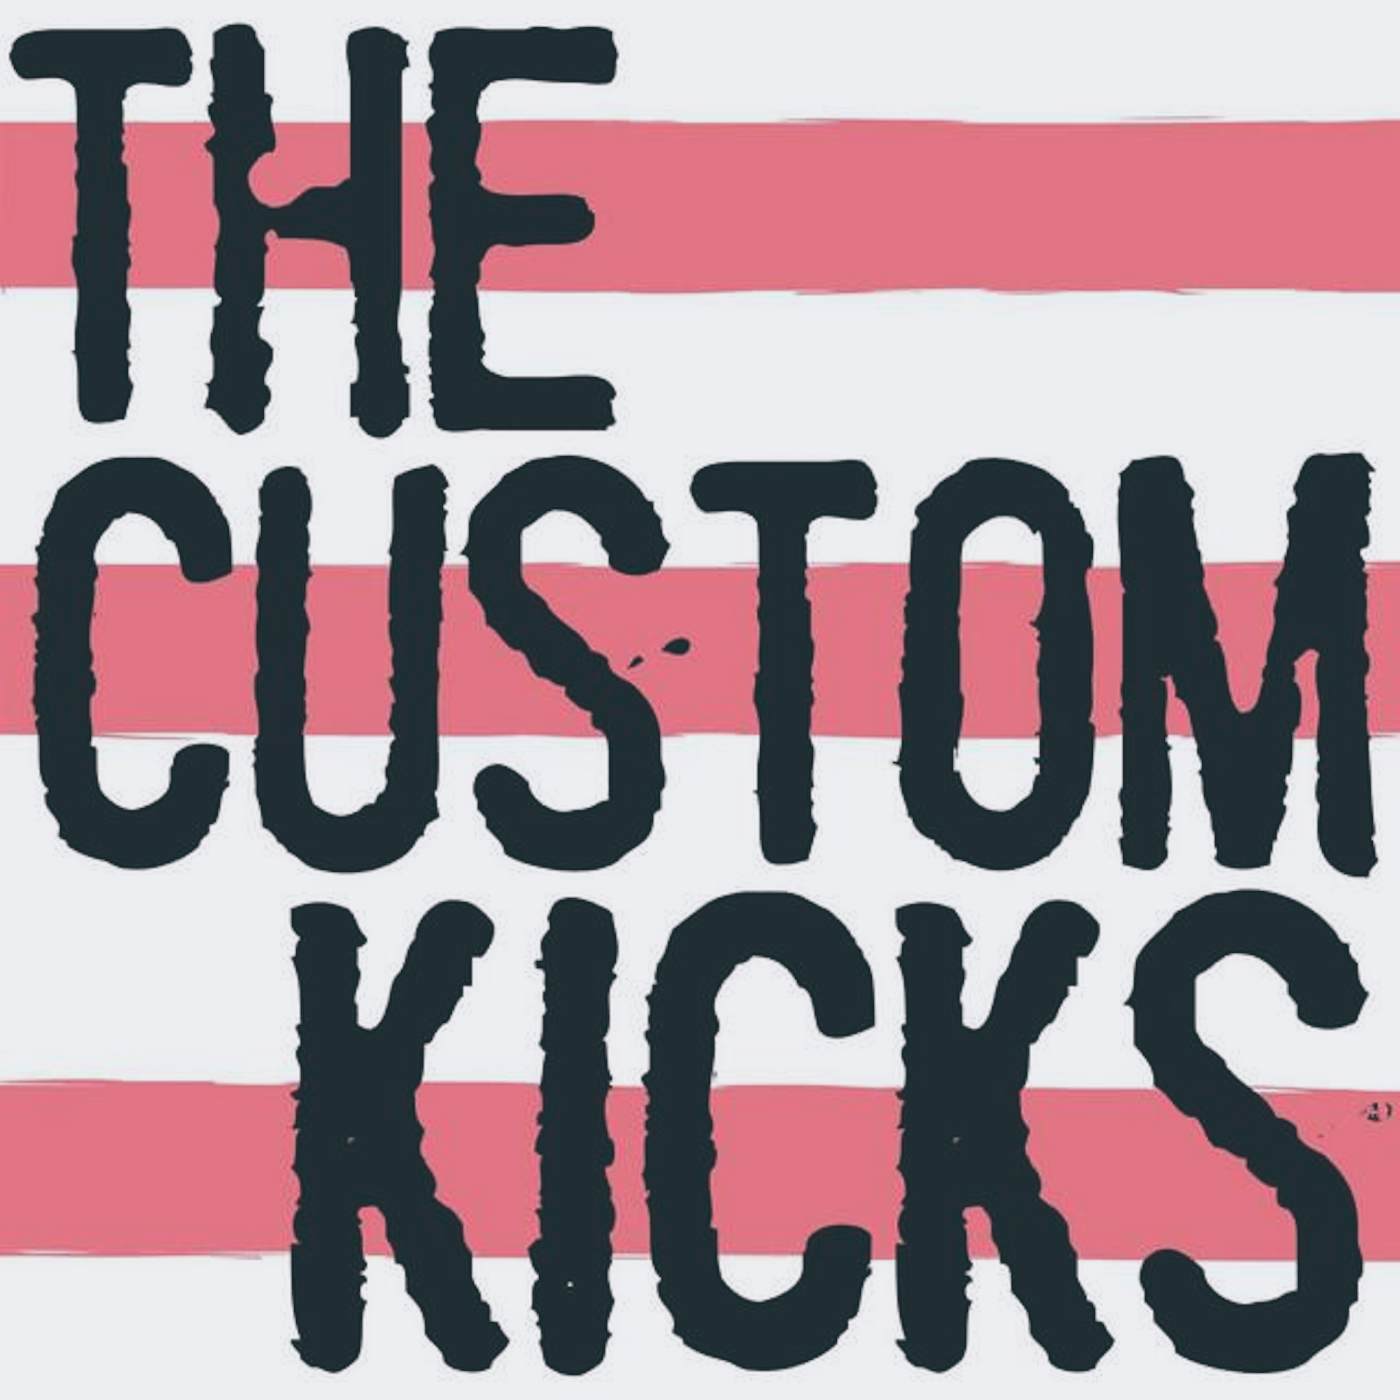 The Custom Kicks